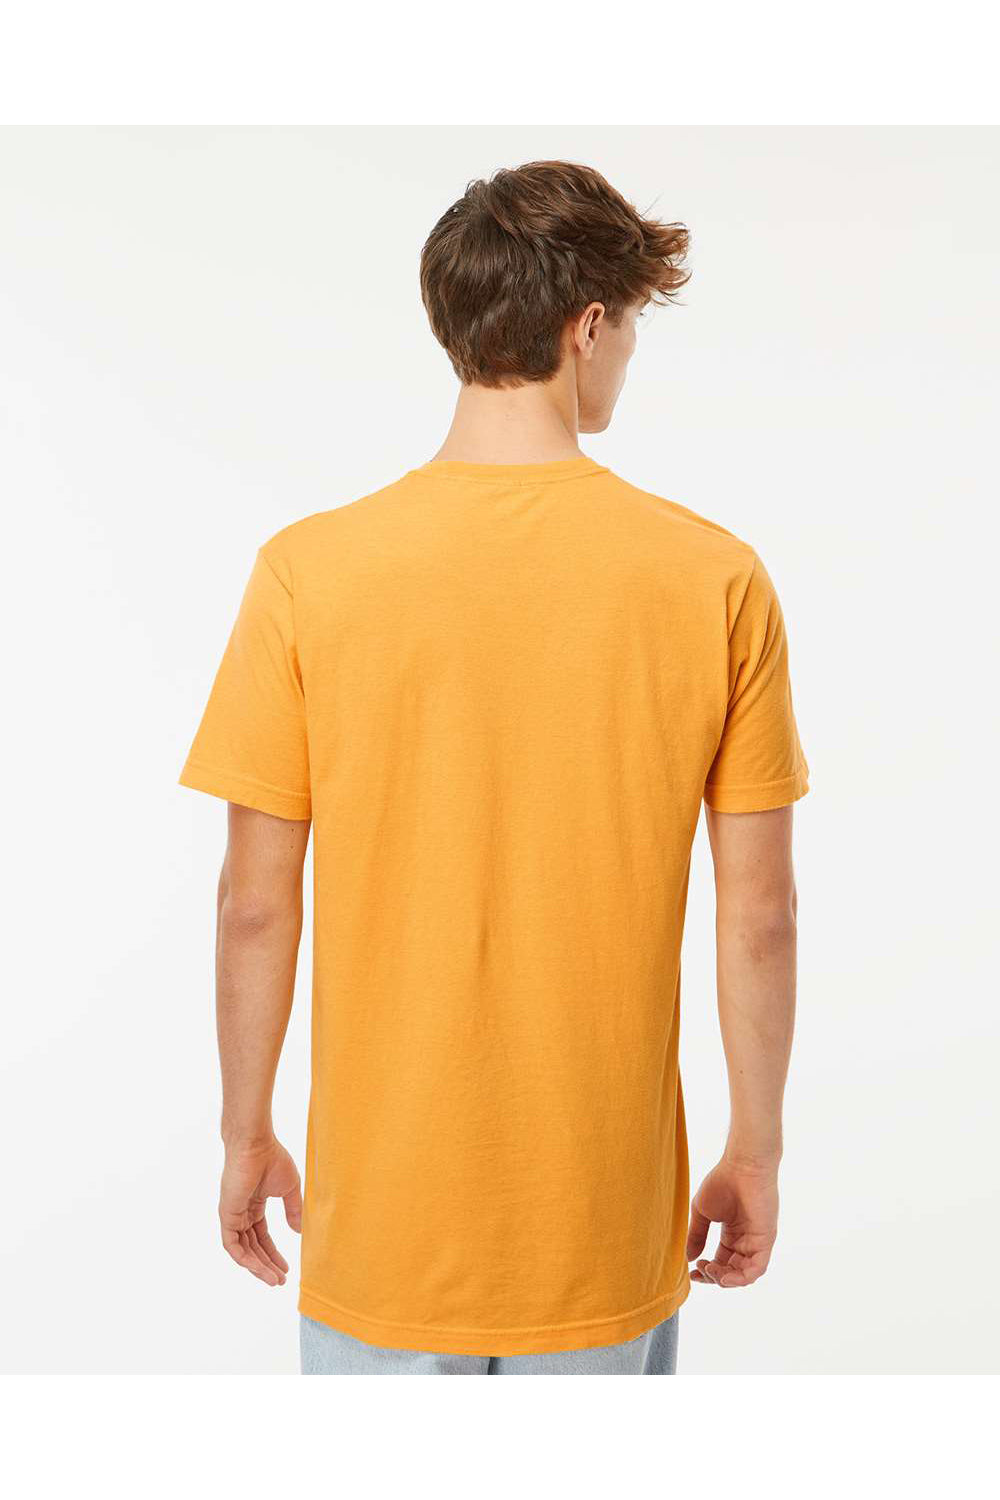 M&O 6500M Mens Vintage Garment Dyed Short Sleeve Crewneck T-Shirt Citrus Yellow Model Back